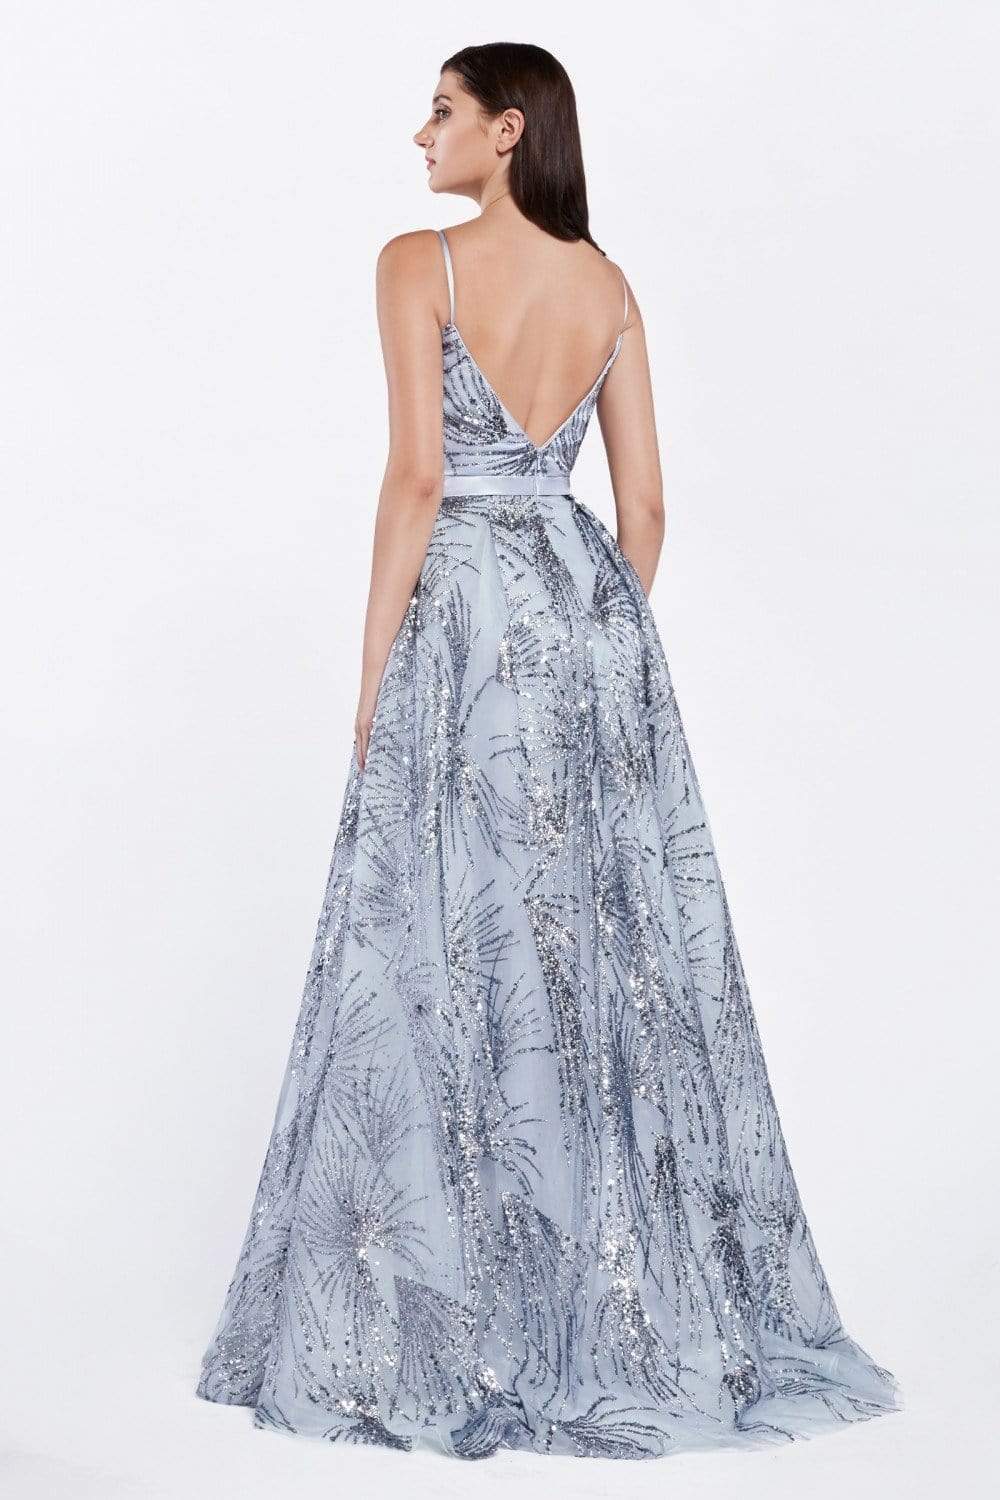 Cinderella Divine - CZ0016 Glitter Print Deep V-neck Ballgown Prom Dresses